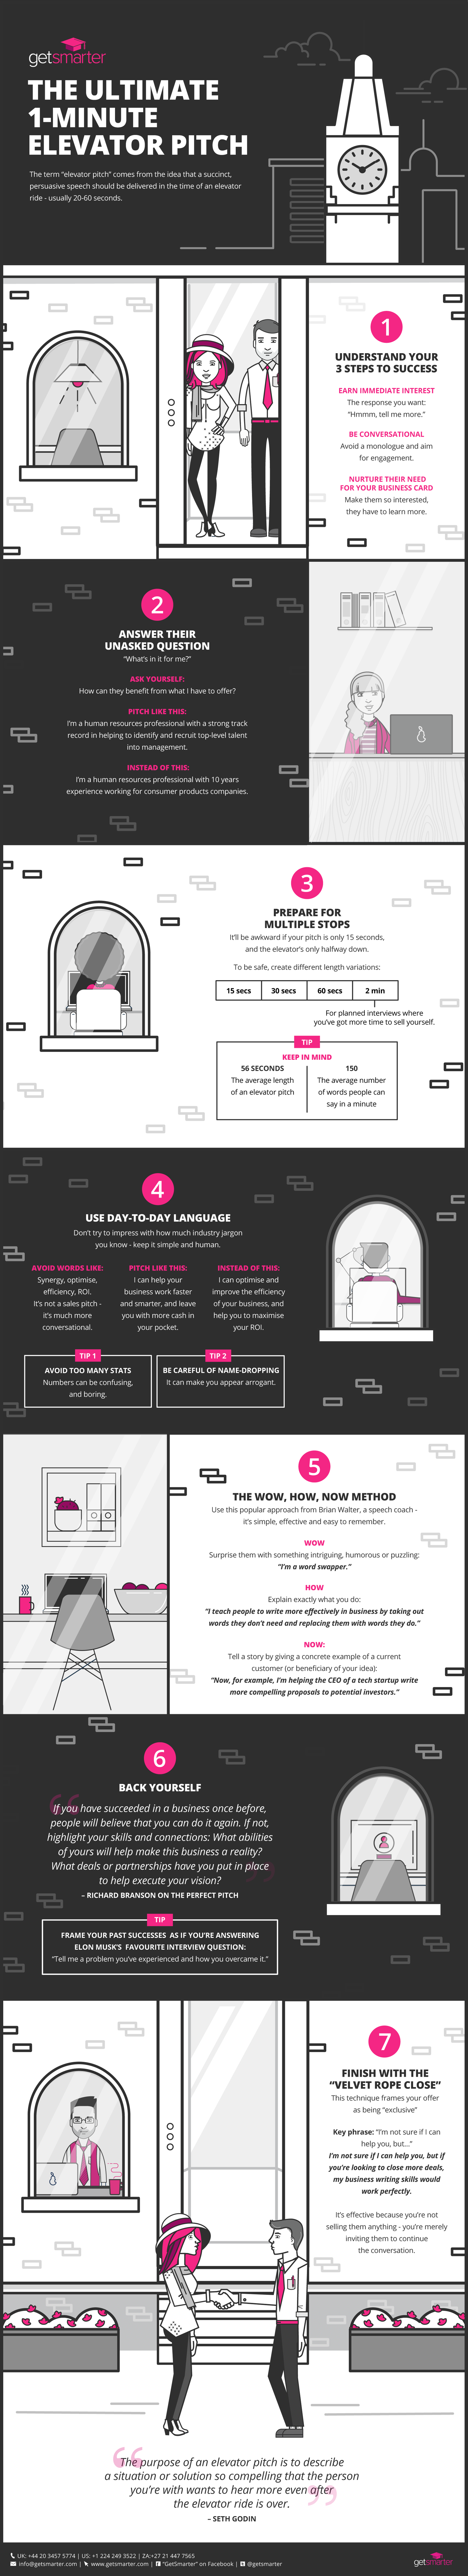 communication-elevator-pitch-business-entrepreneur-infographic